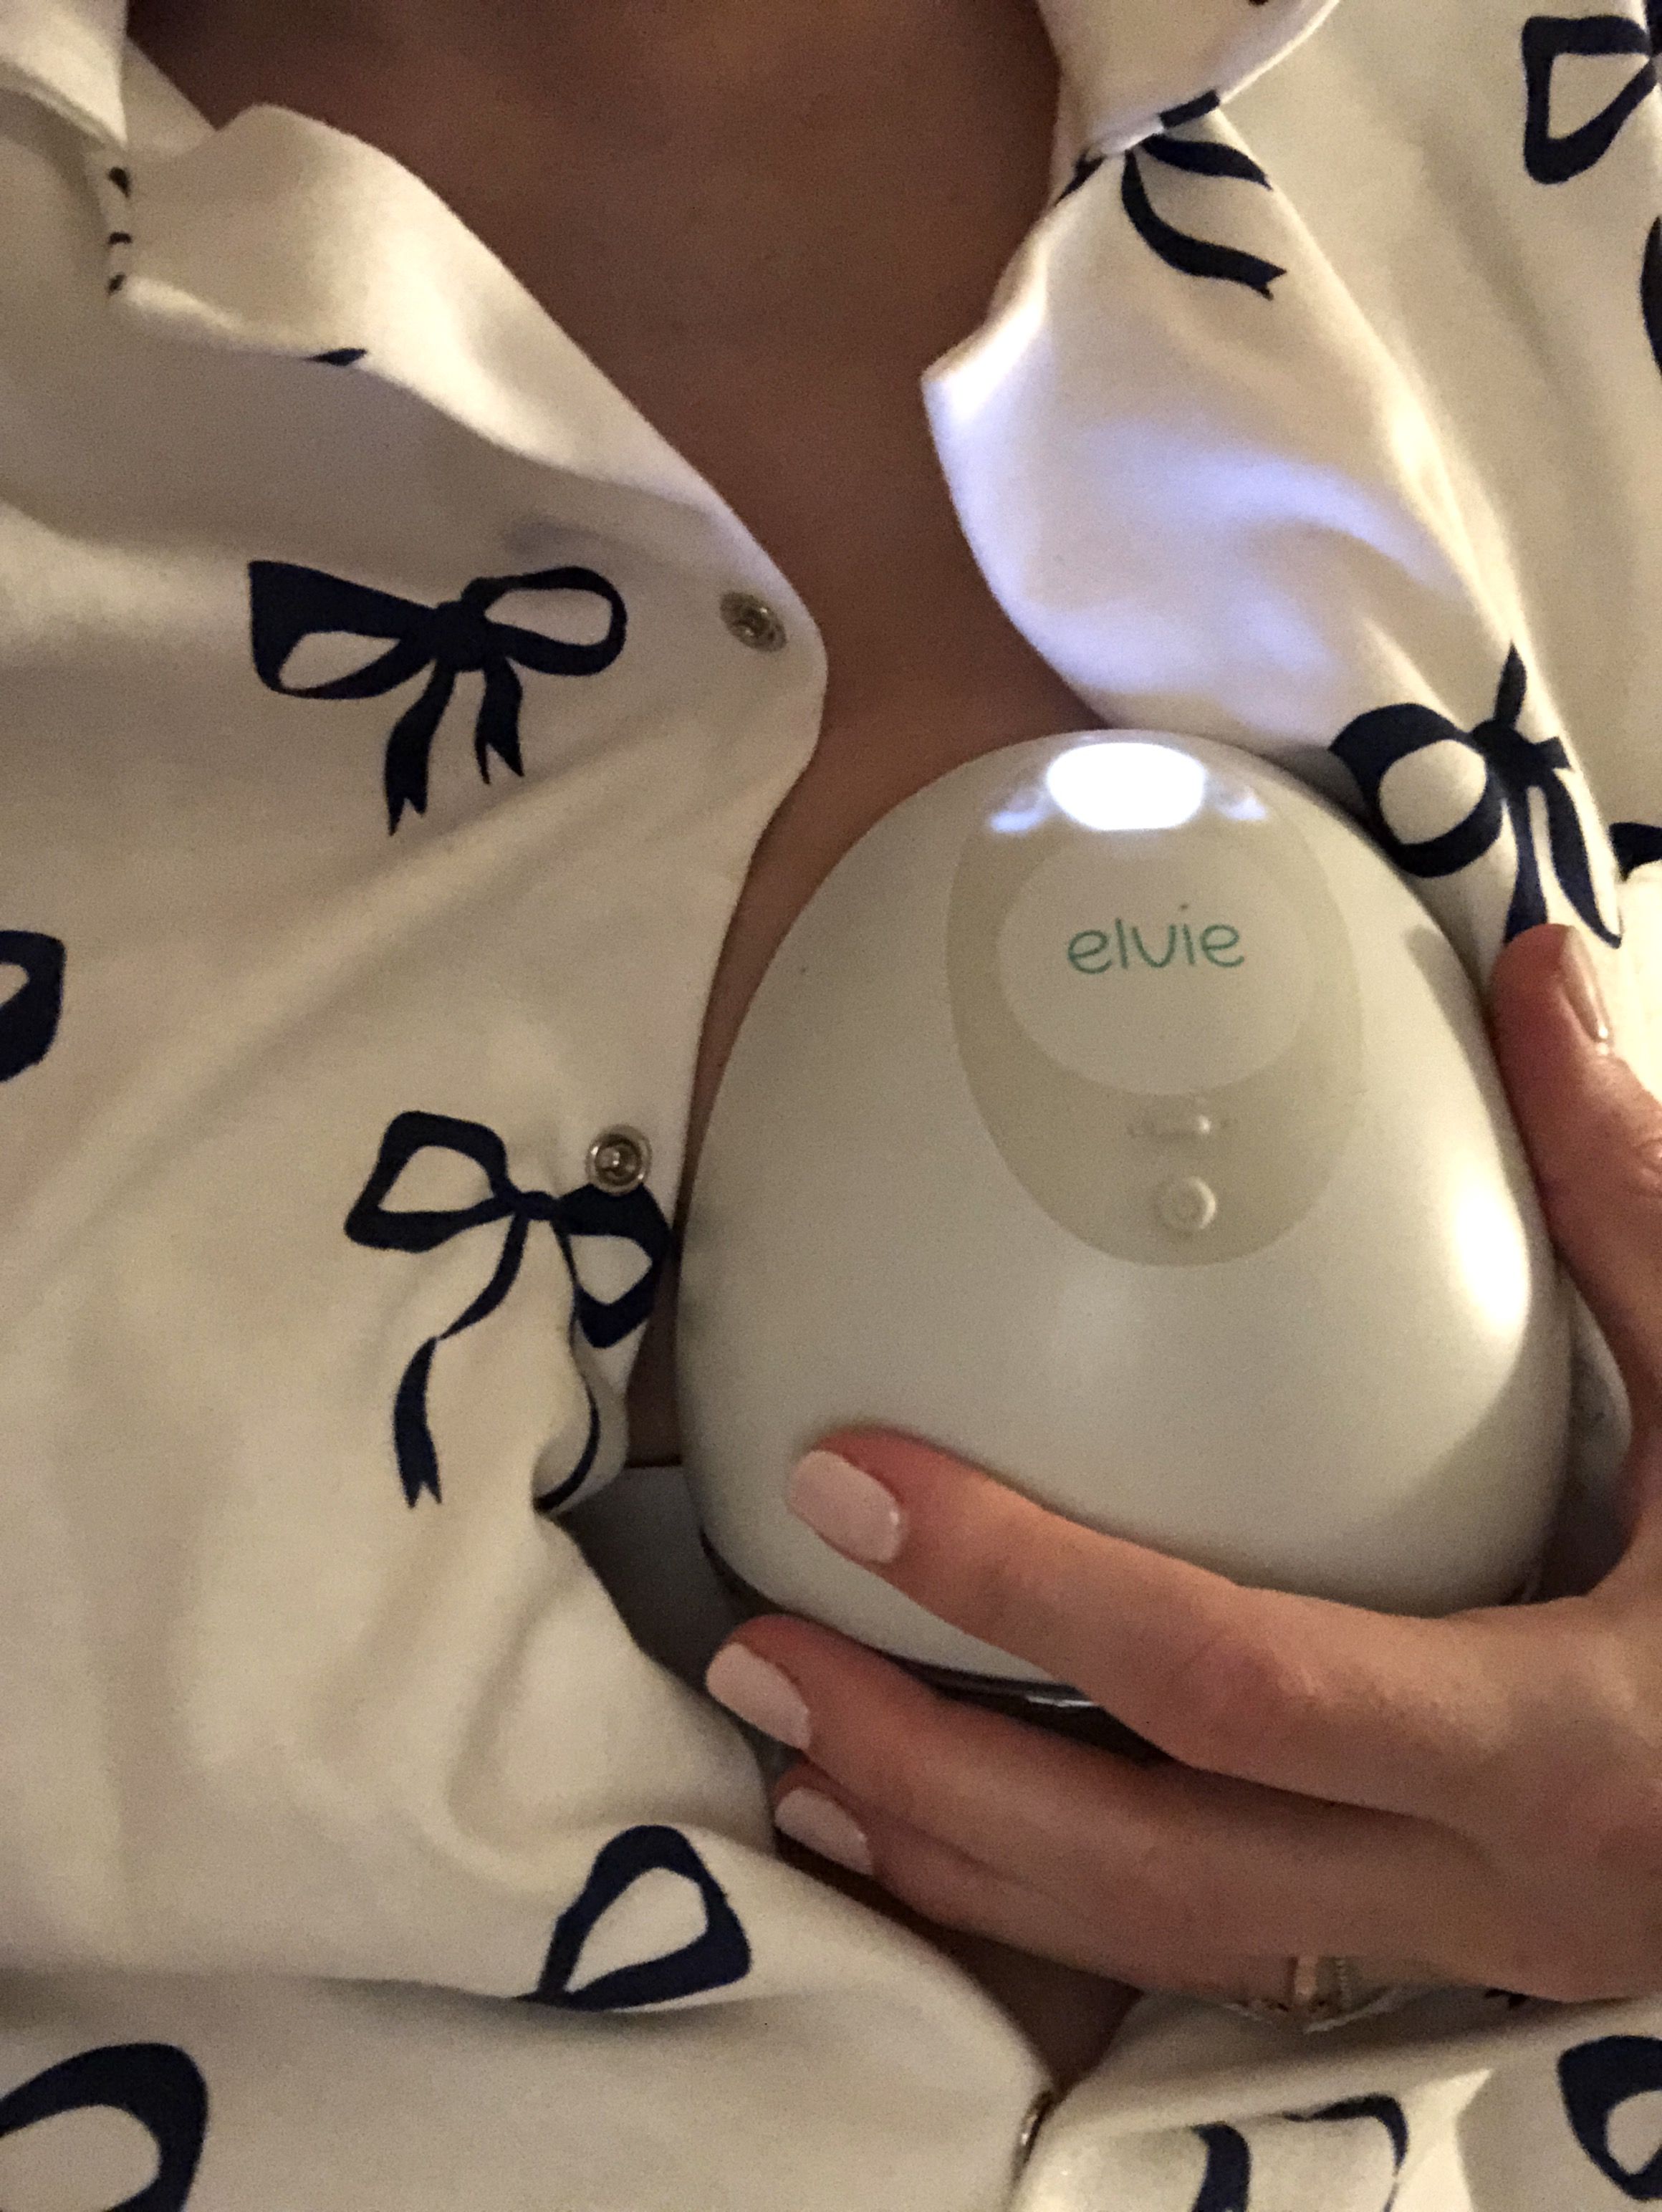 Elvie's wearable breast pump feels like breaking out of jail - CNET